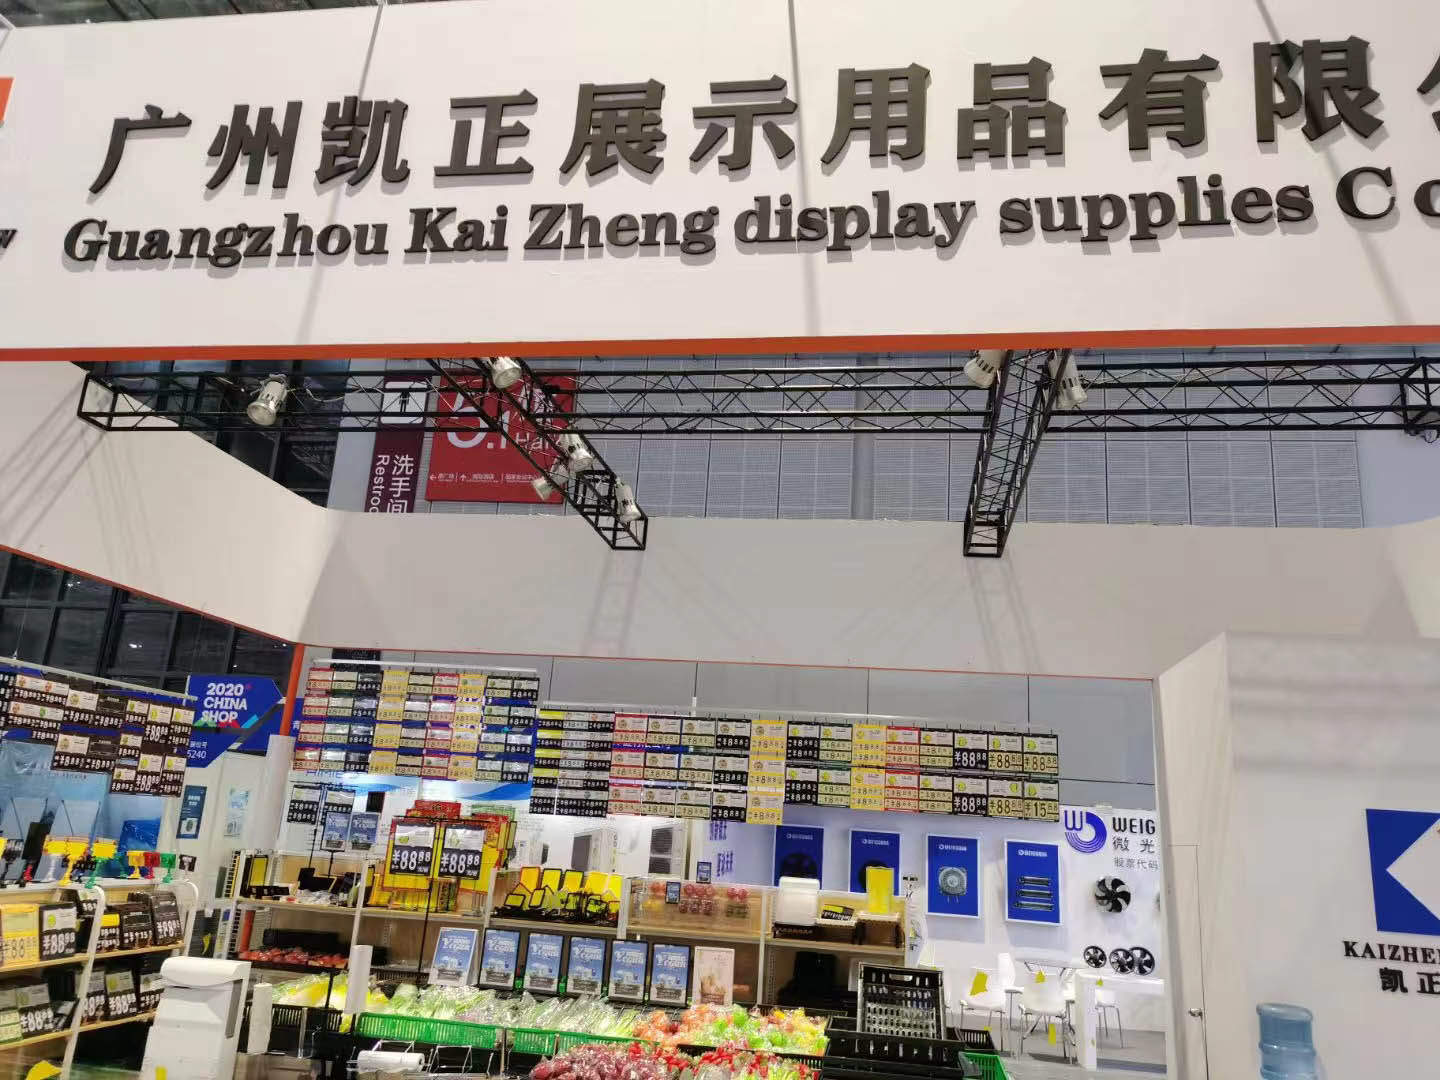 Guangzhou Kaizheng Display Products Co., Ltd. បានបង្ហាញខ្លួននៅក្នុងពិព័រណ៍ឧស្សាហកម្មលក់រាយនៅសៀងហៃ